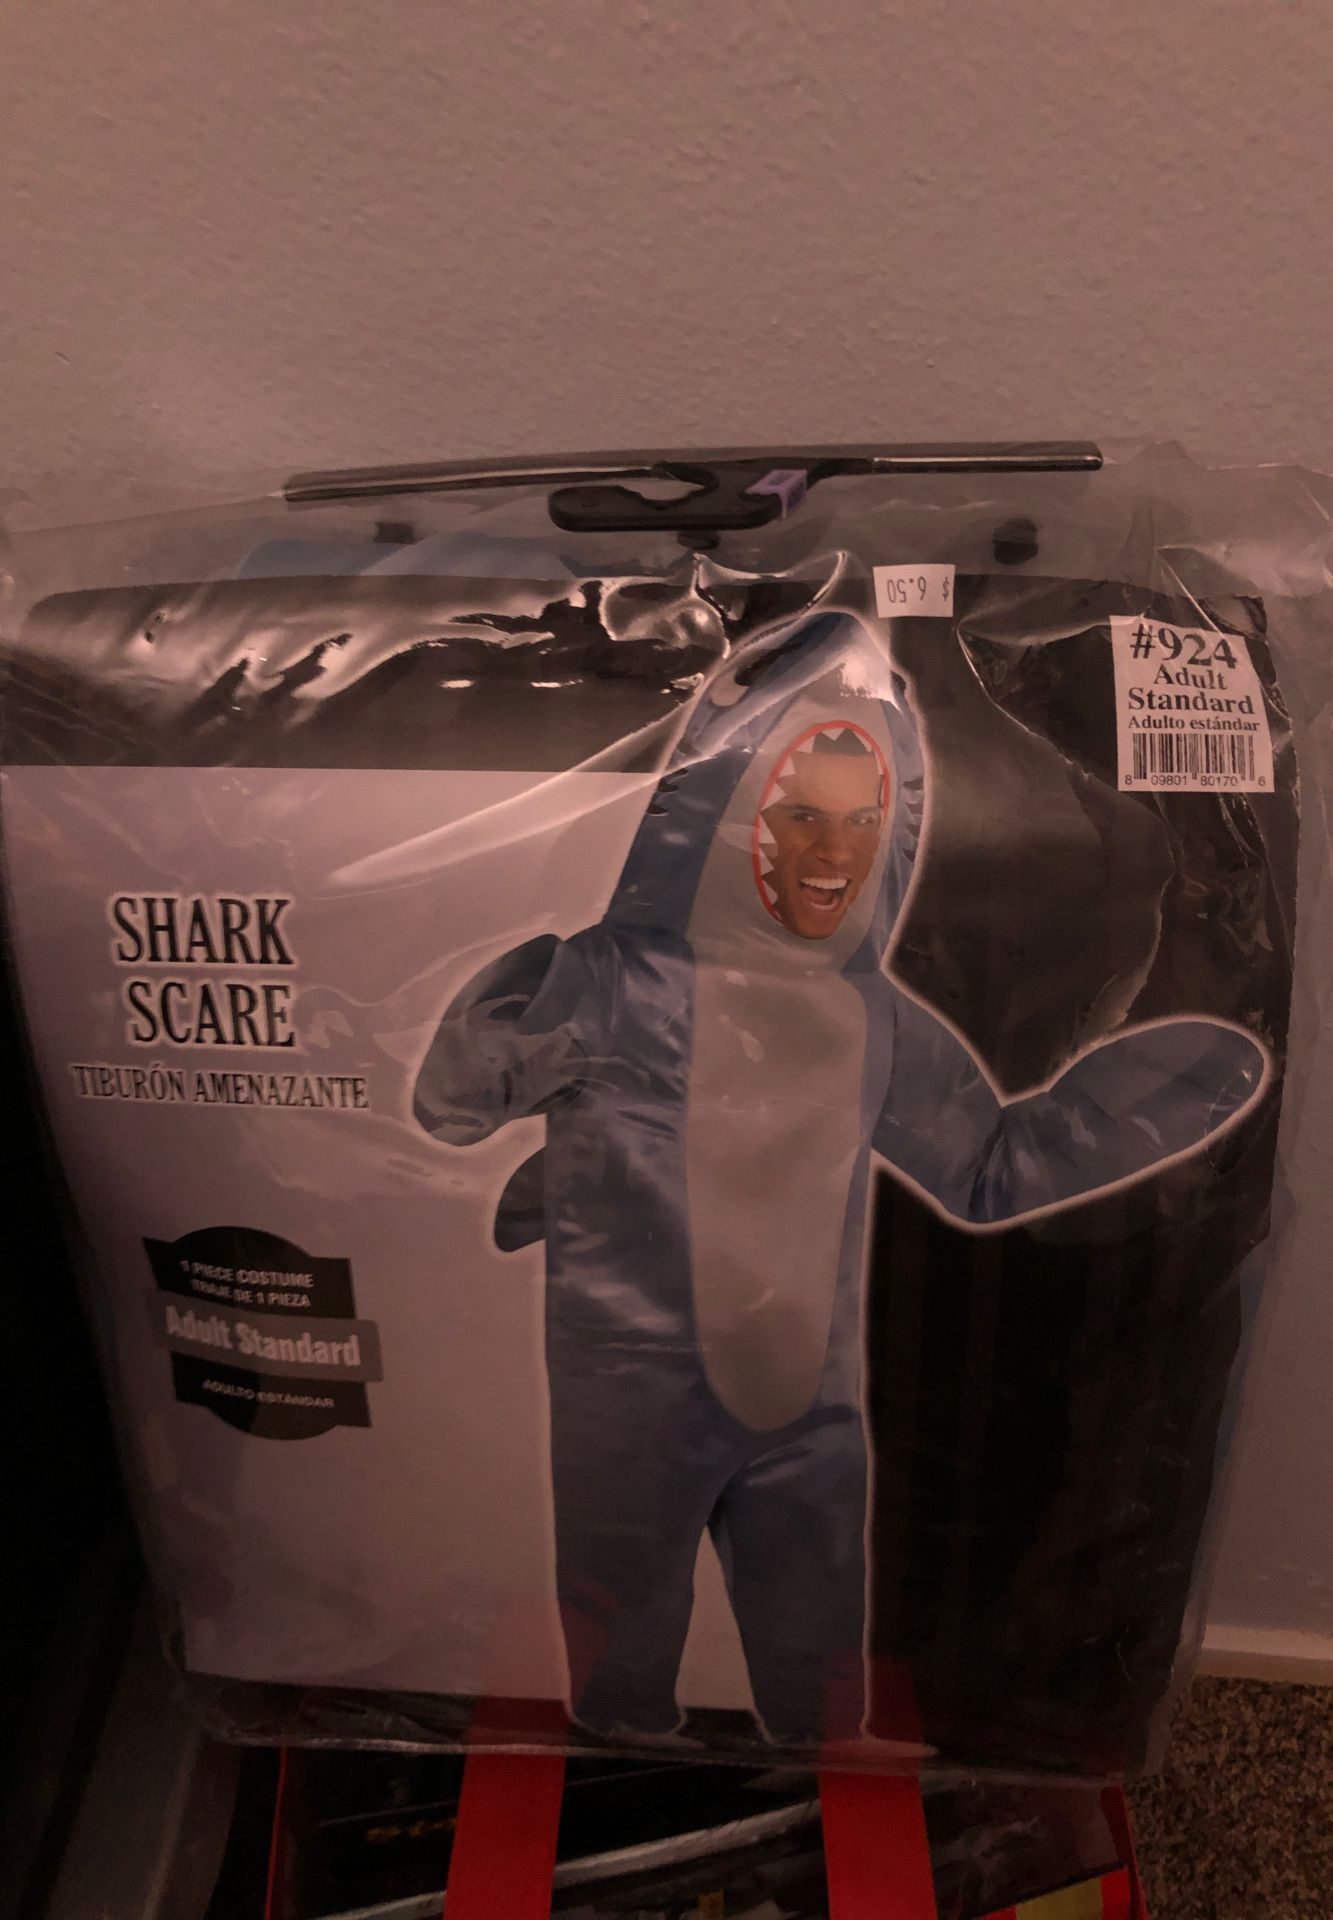 Scare shark Costume